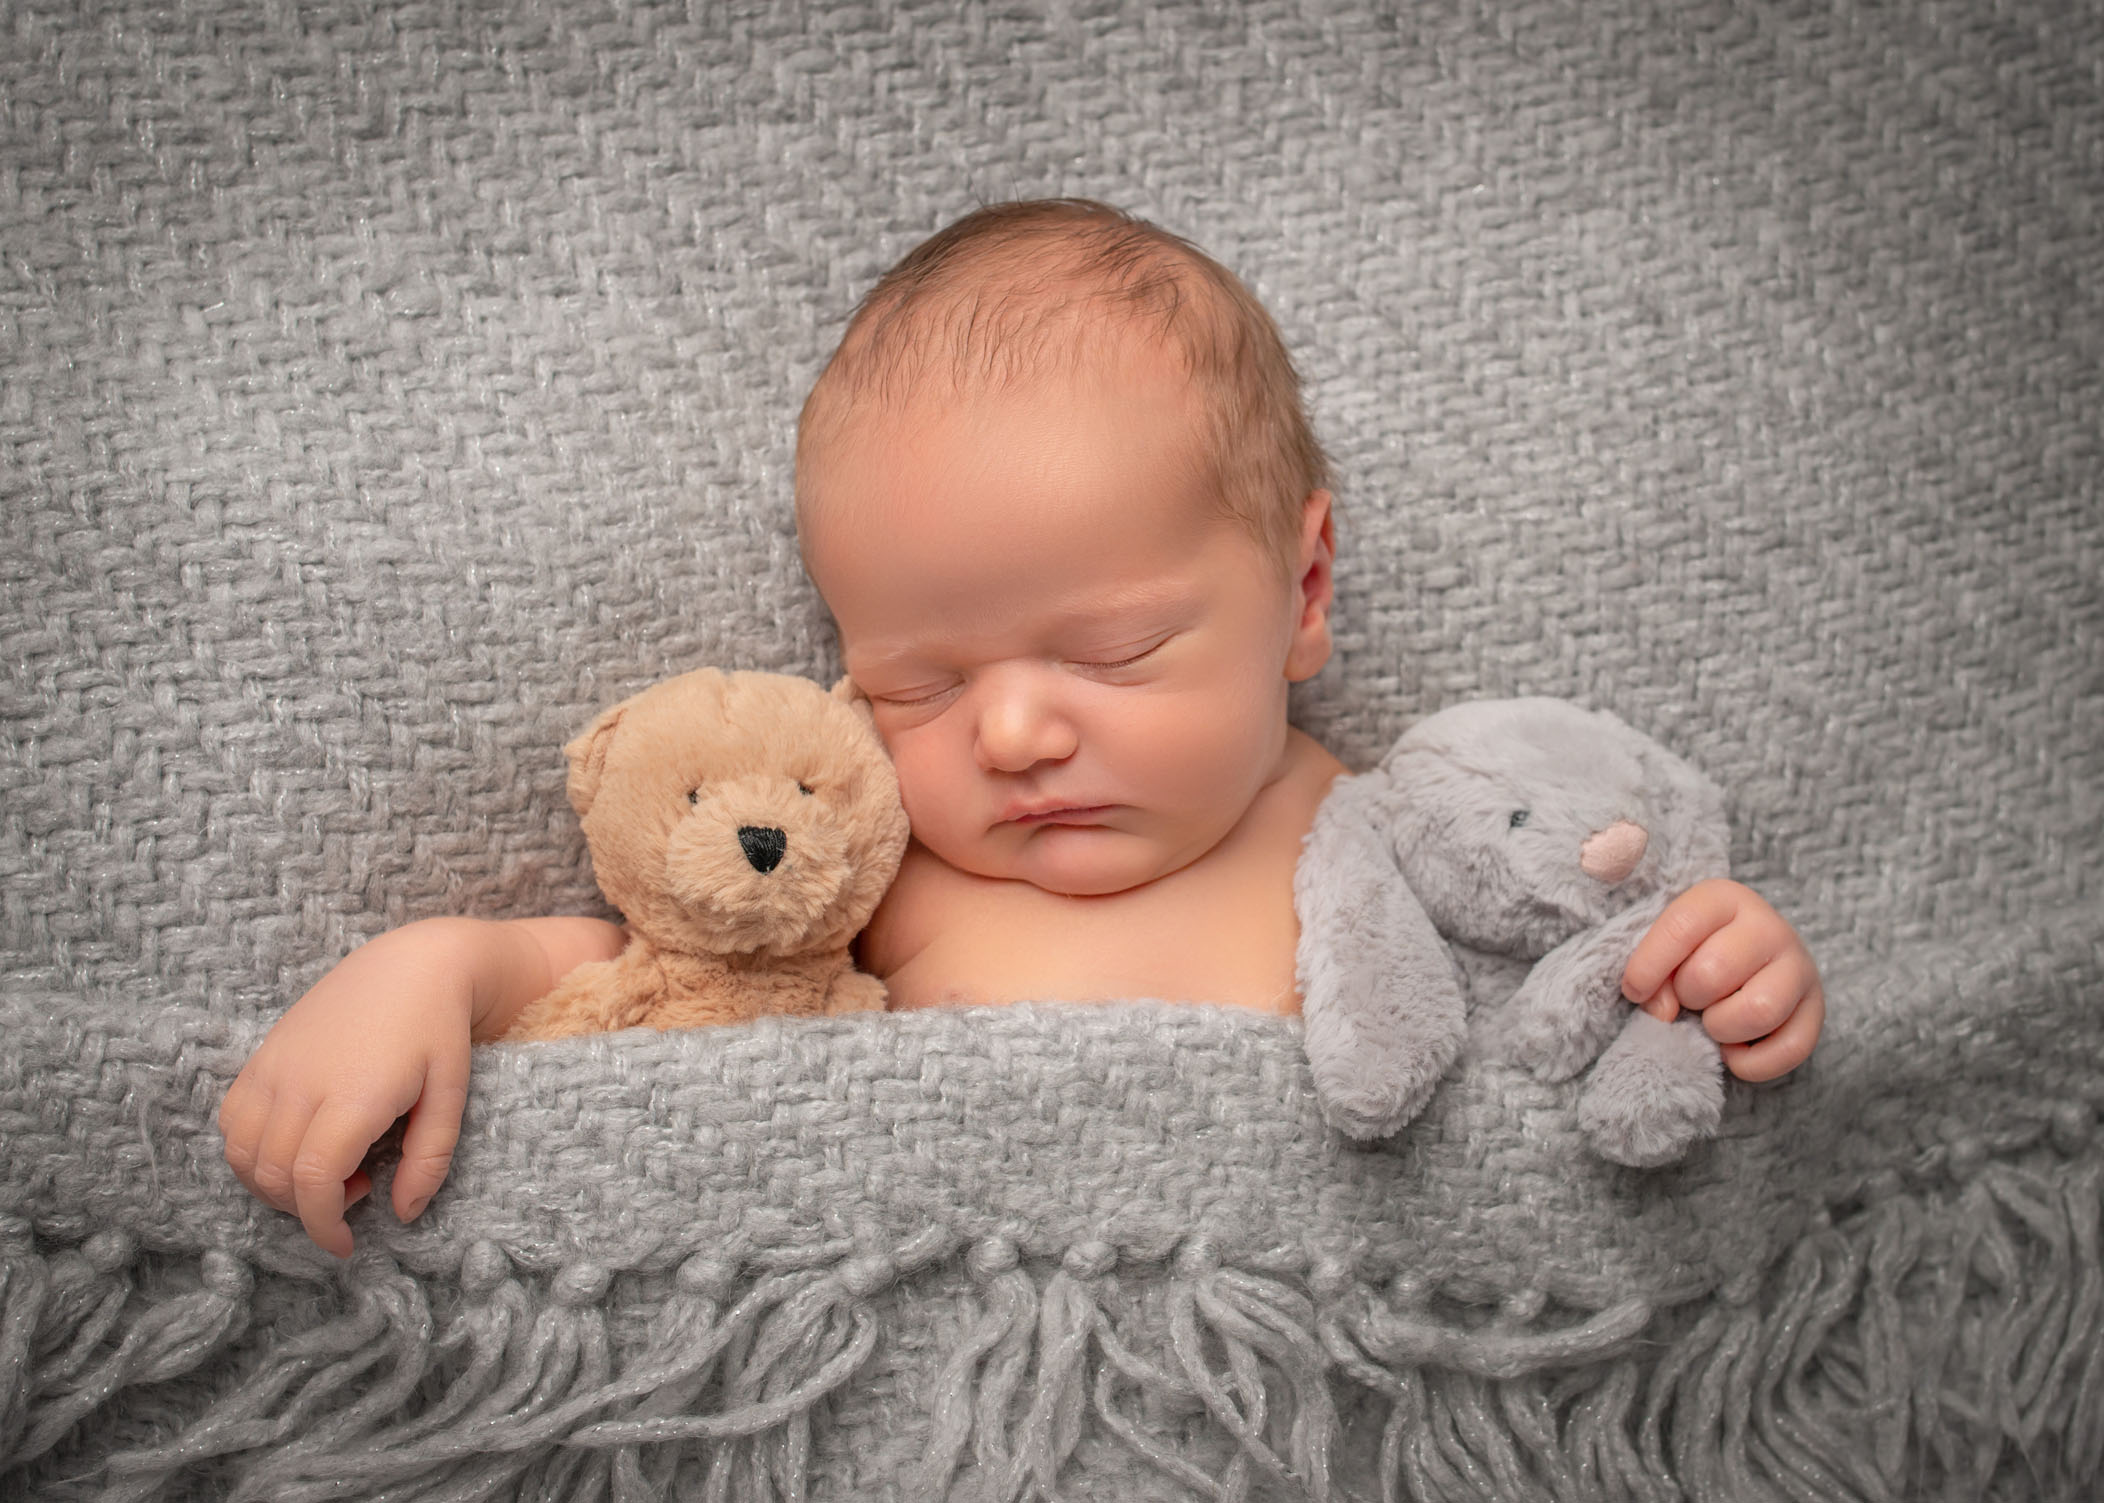 Newborn baby sleeping under grey blanket with two stuffed animals